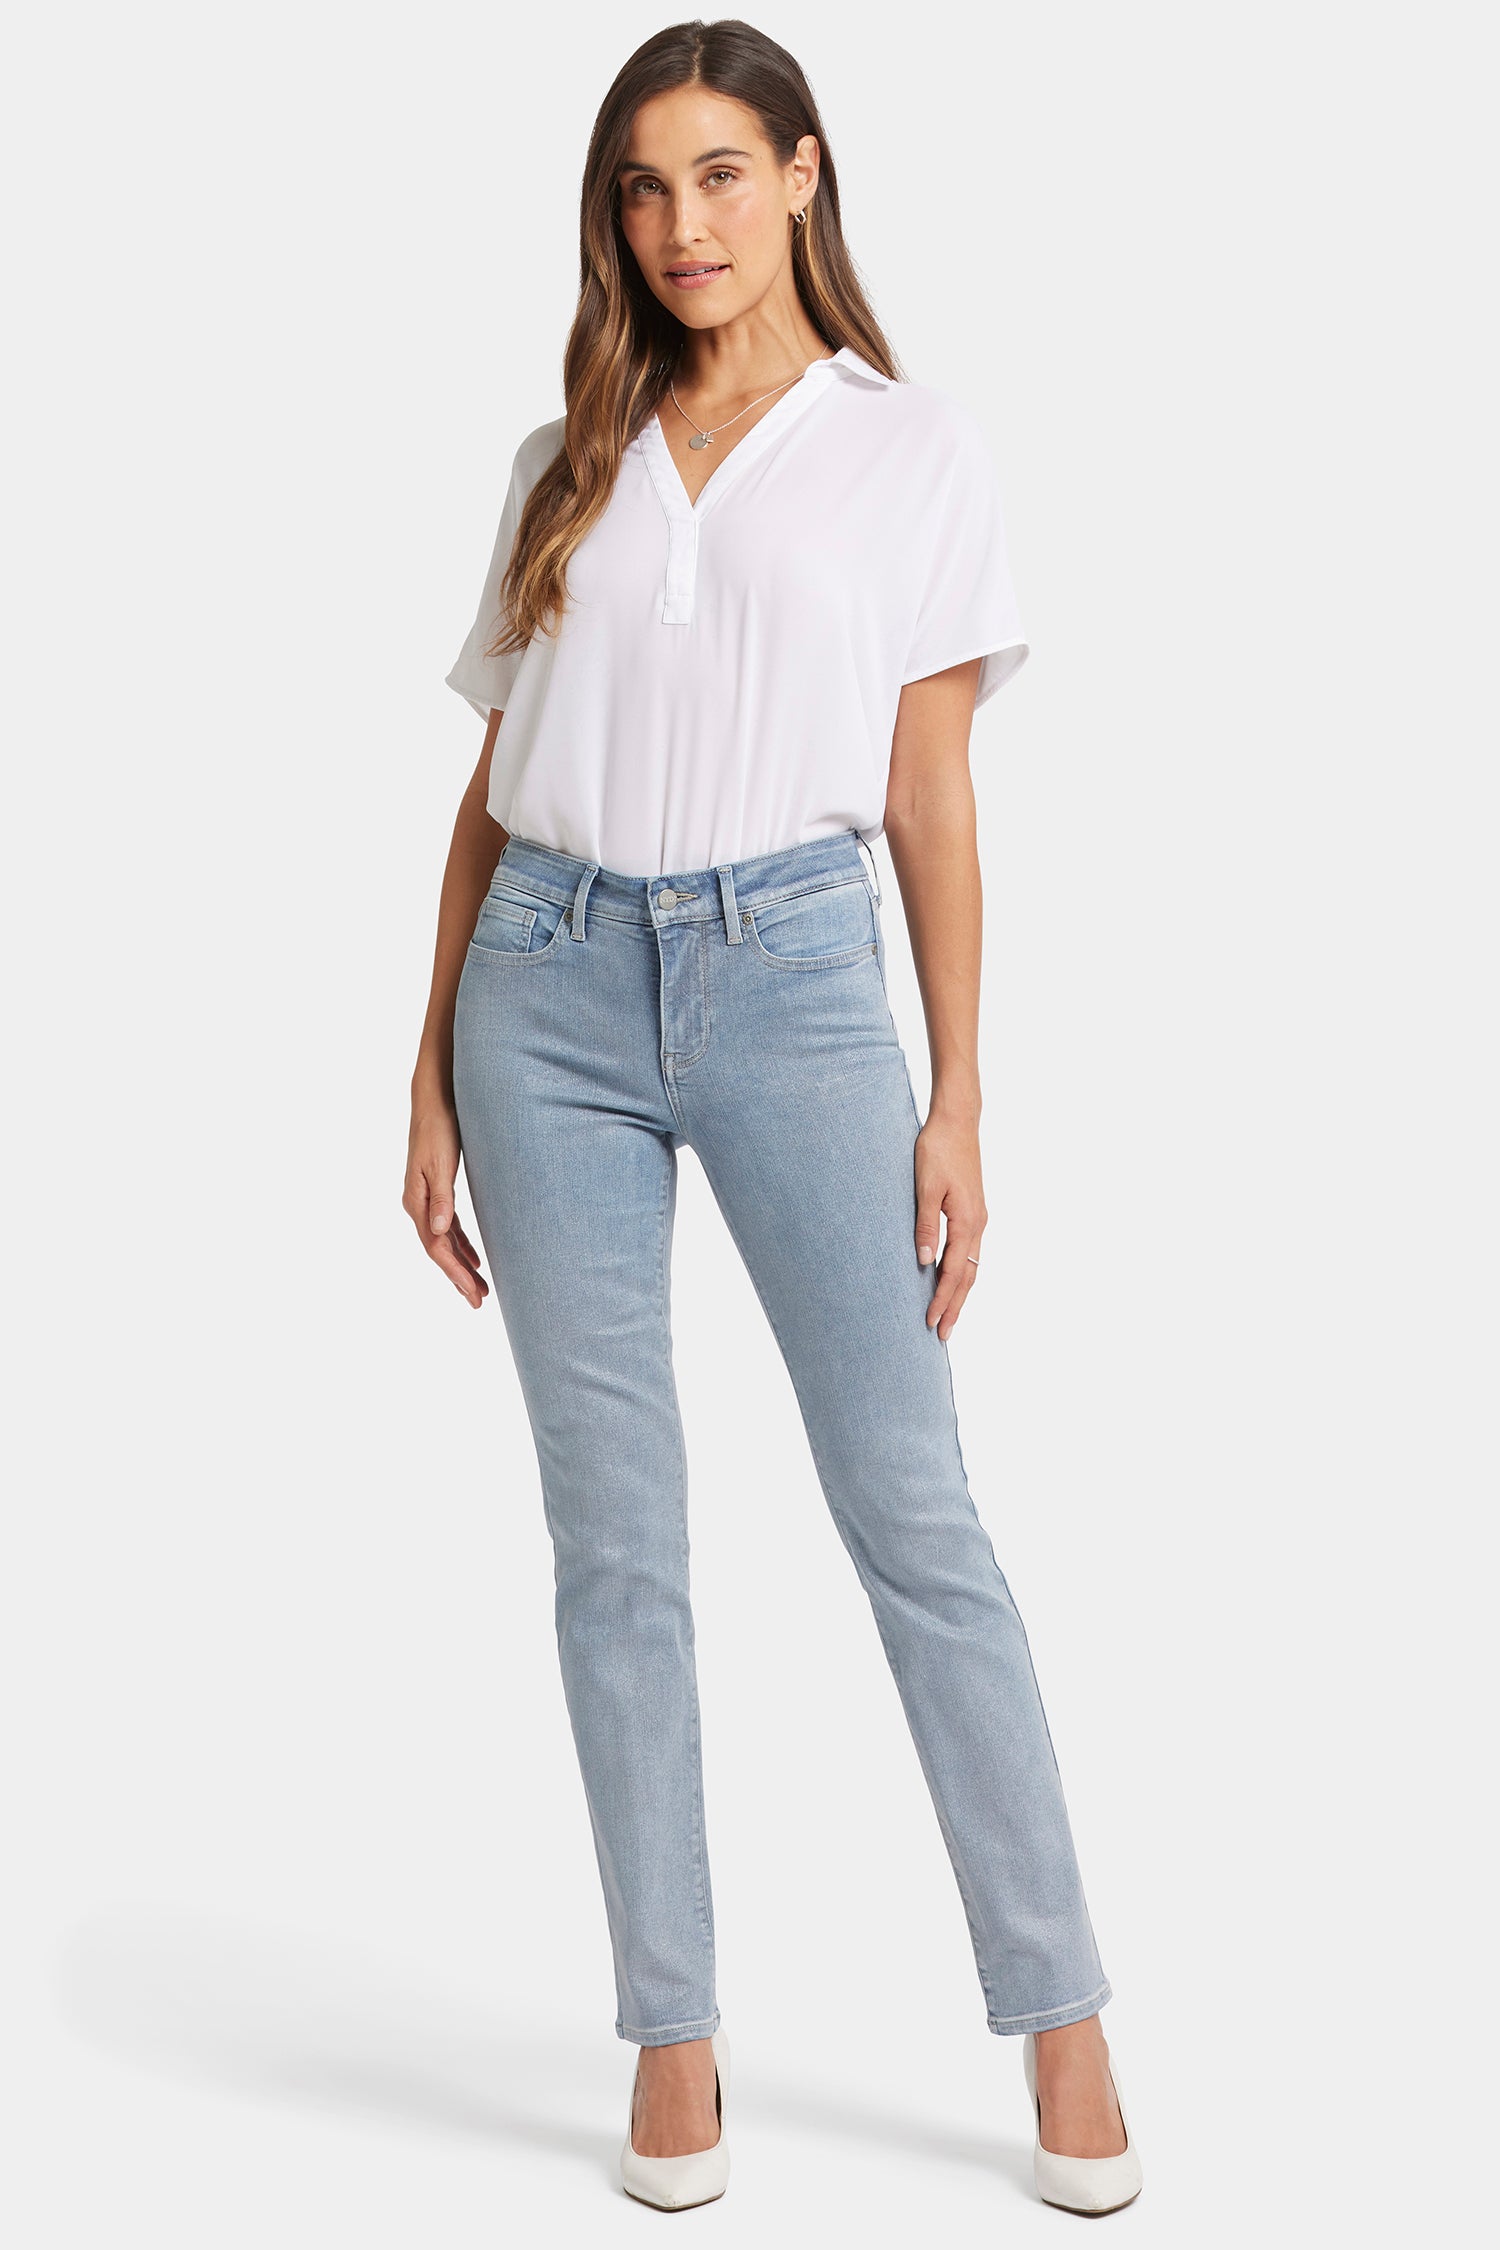 Sheri Slim Jeans In Petite With Silver Foil Coating - Sparkling Lights Blue  | NYDJ